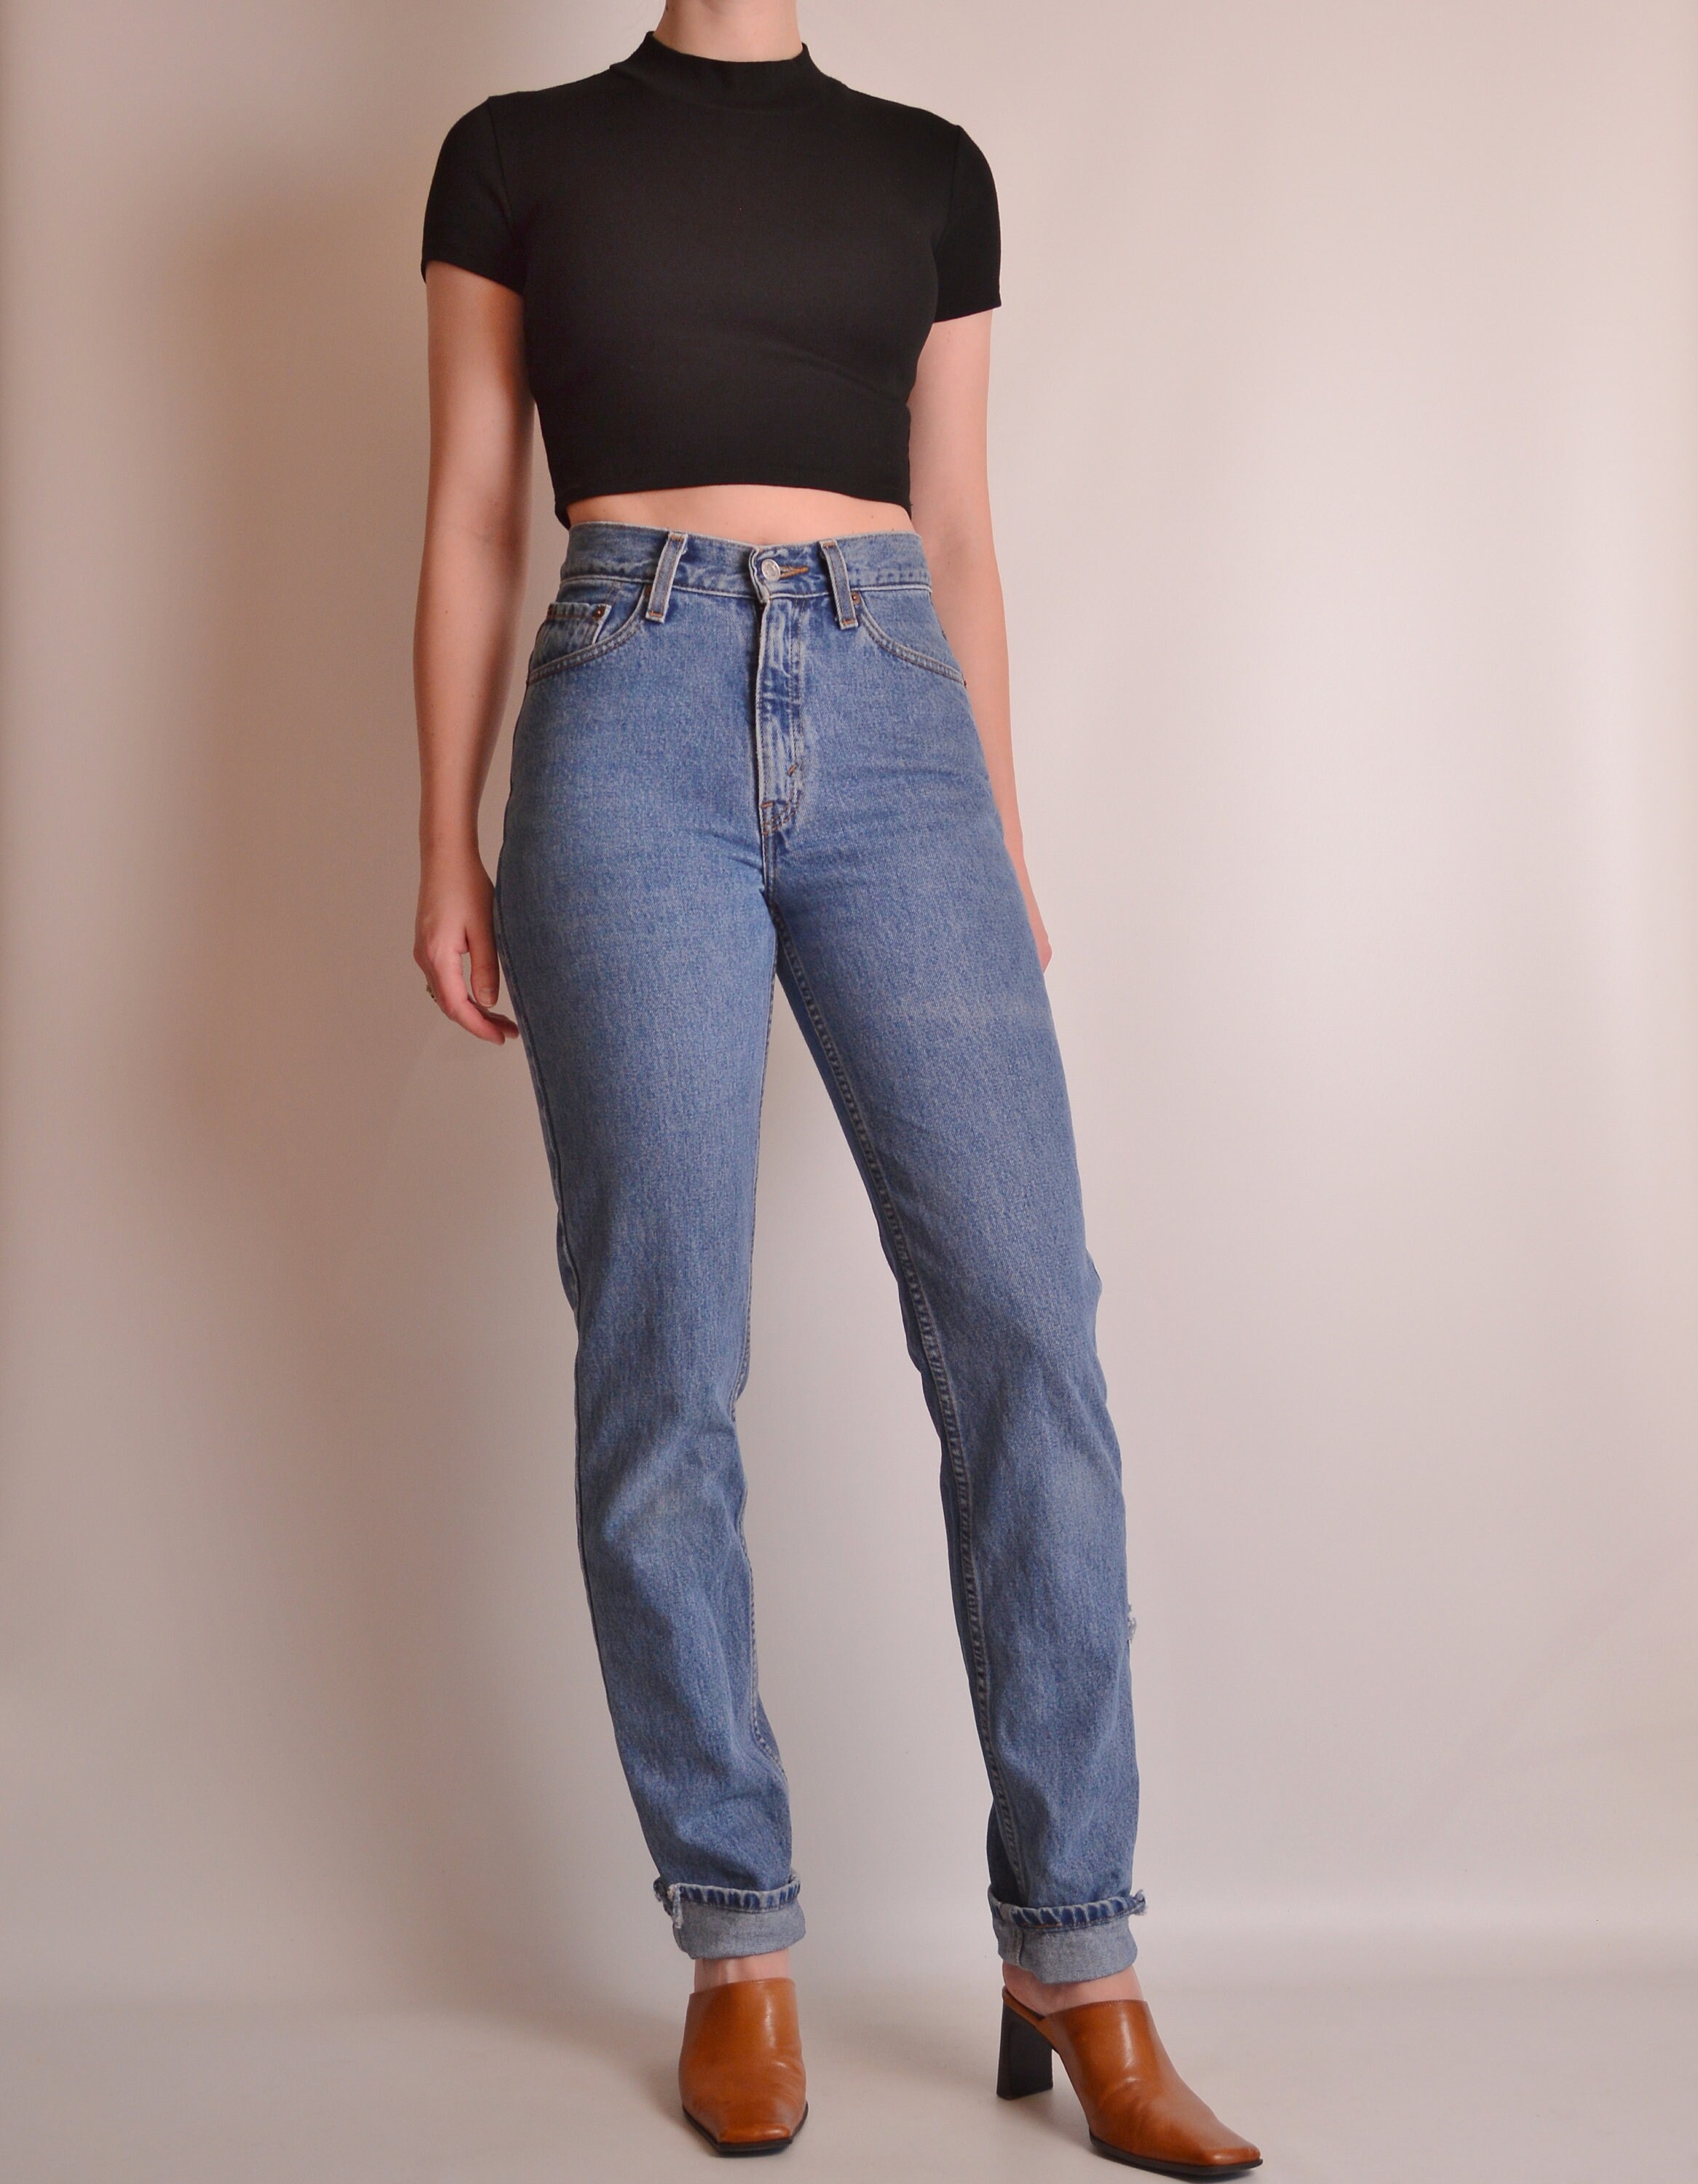 Vintage LEVI'S 512 Slim Fit Jeans (26”W) High Waist